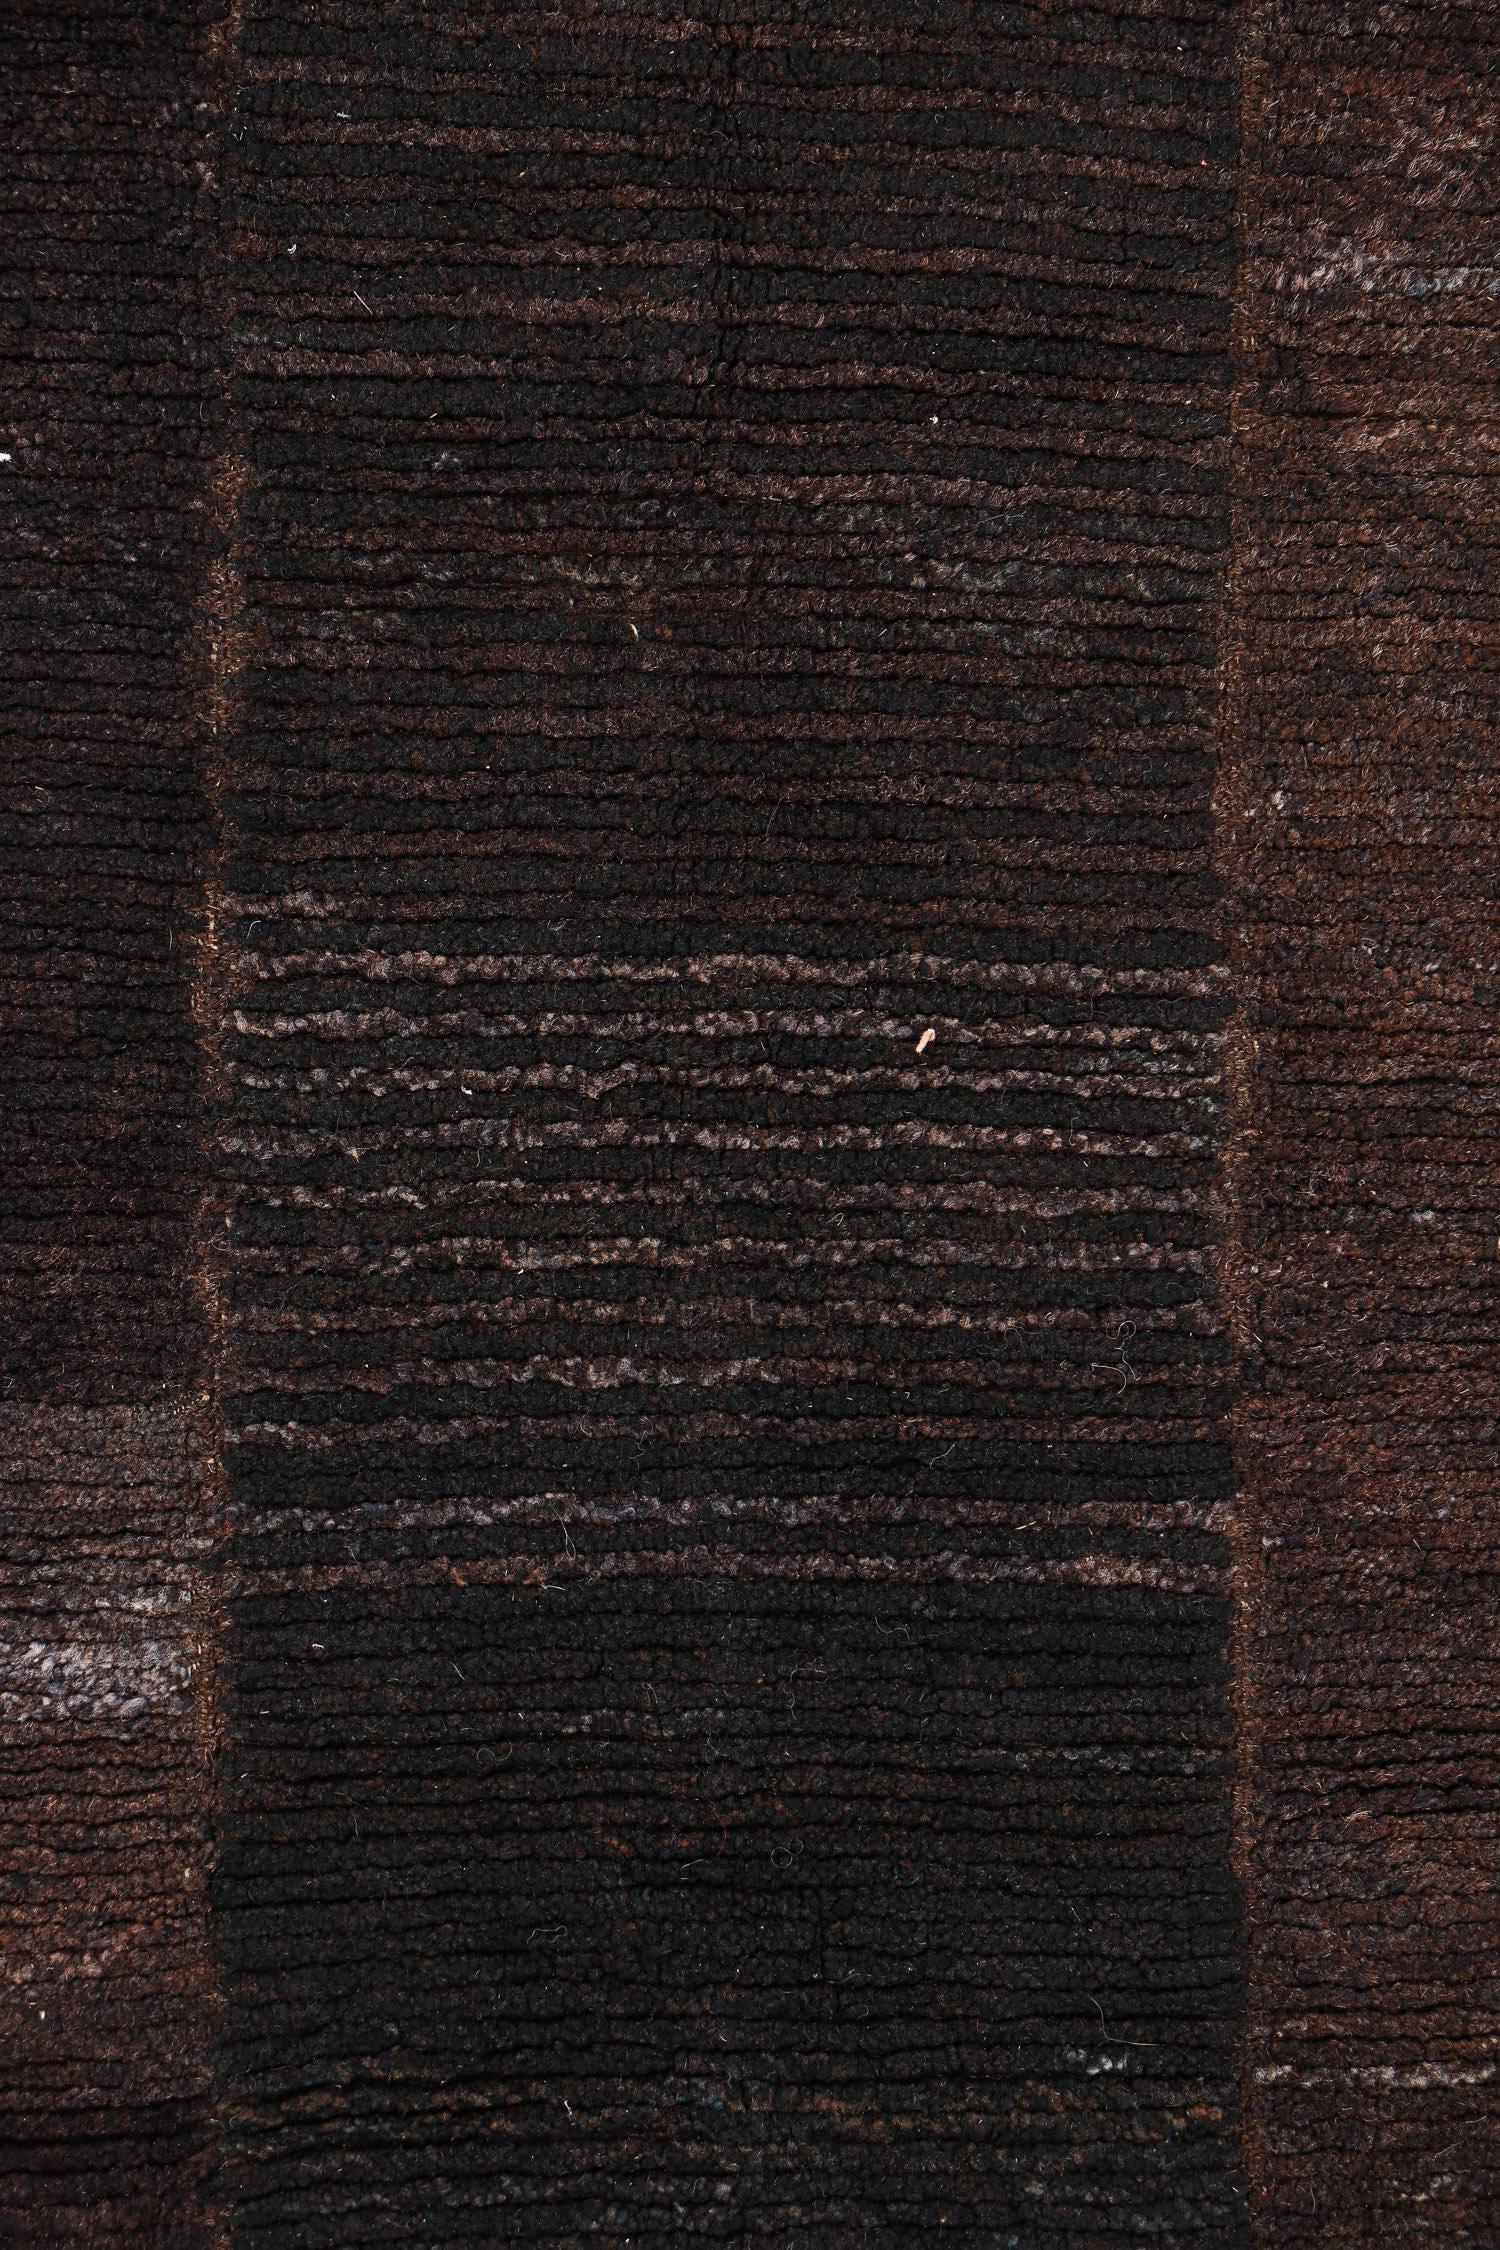 Tsuk truk rug, Tibet, early 20th C., Measures: 2'8'' x 5'2'' (81 x 157 cm). Wool. Red/orange border on chocolate brown.